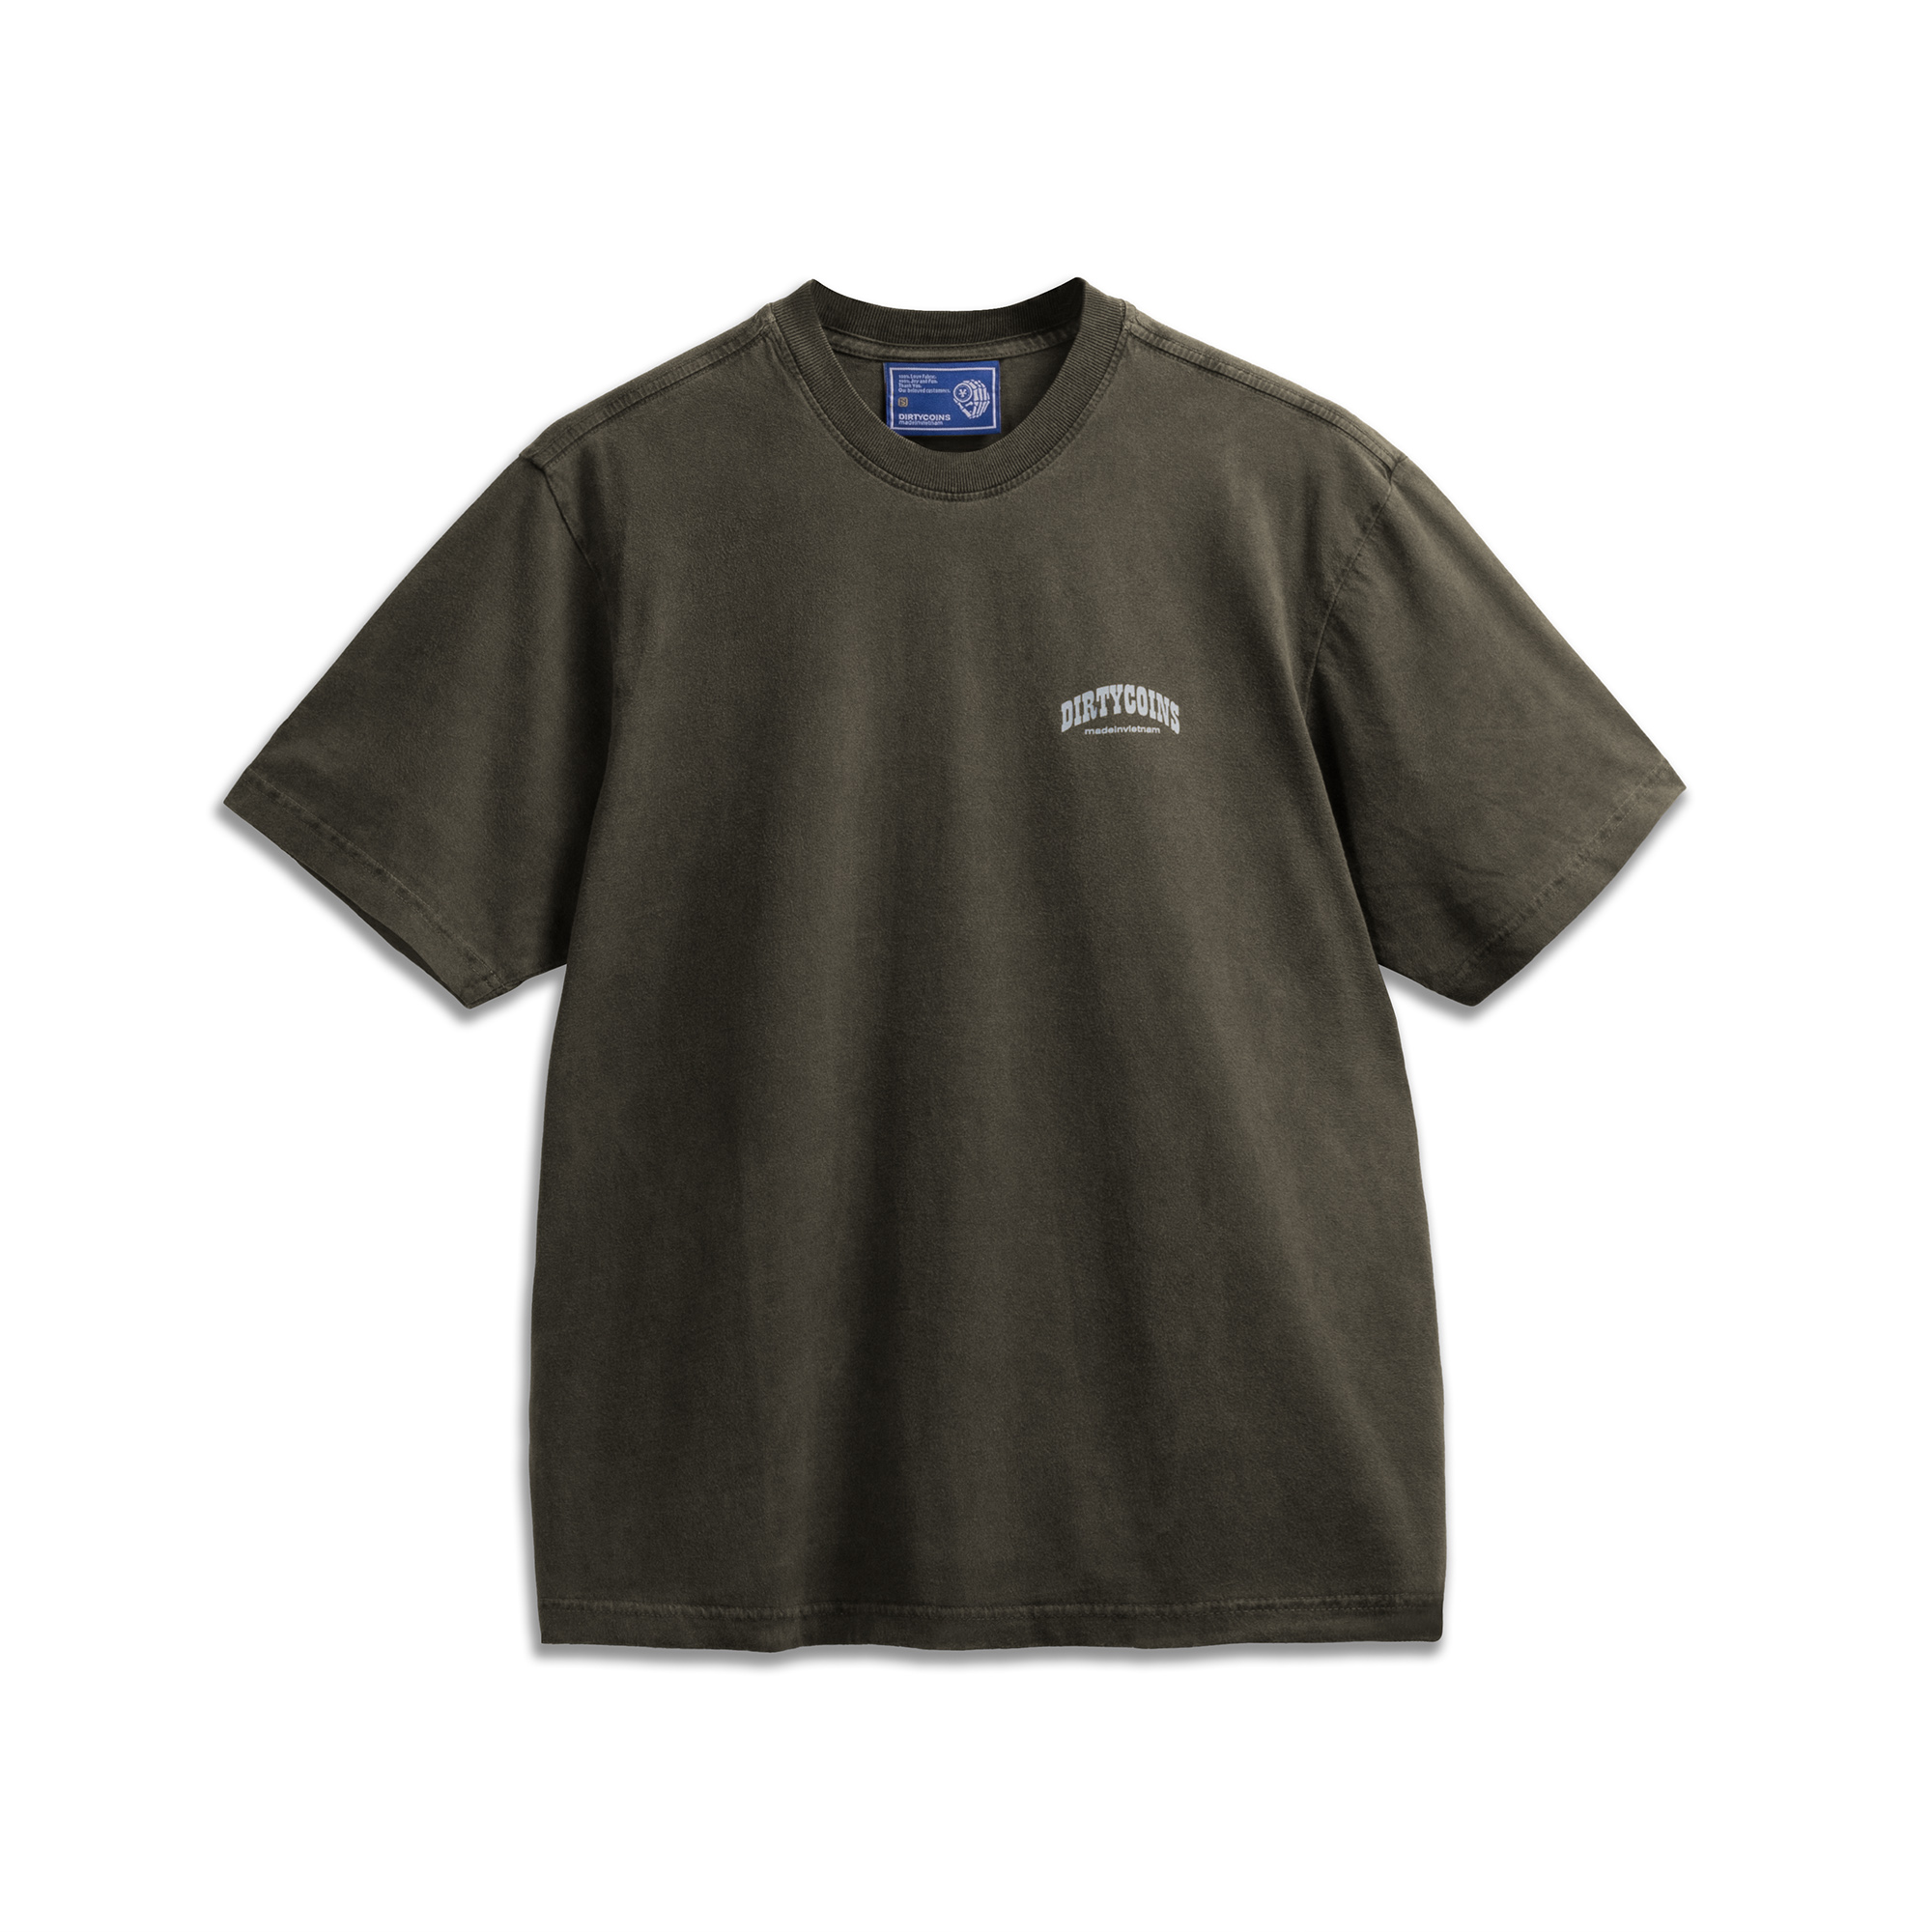 Áo thun DirtyCoins Arc Logo Wash T-shirt - Brown